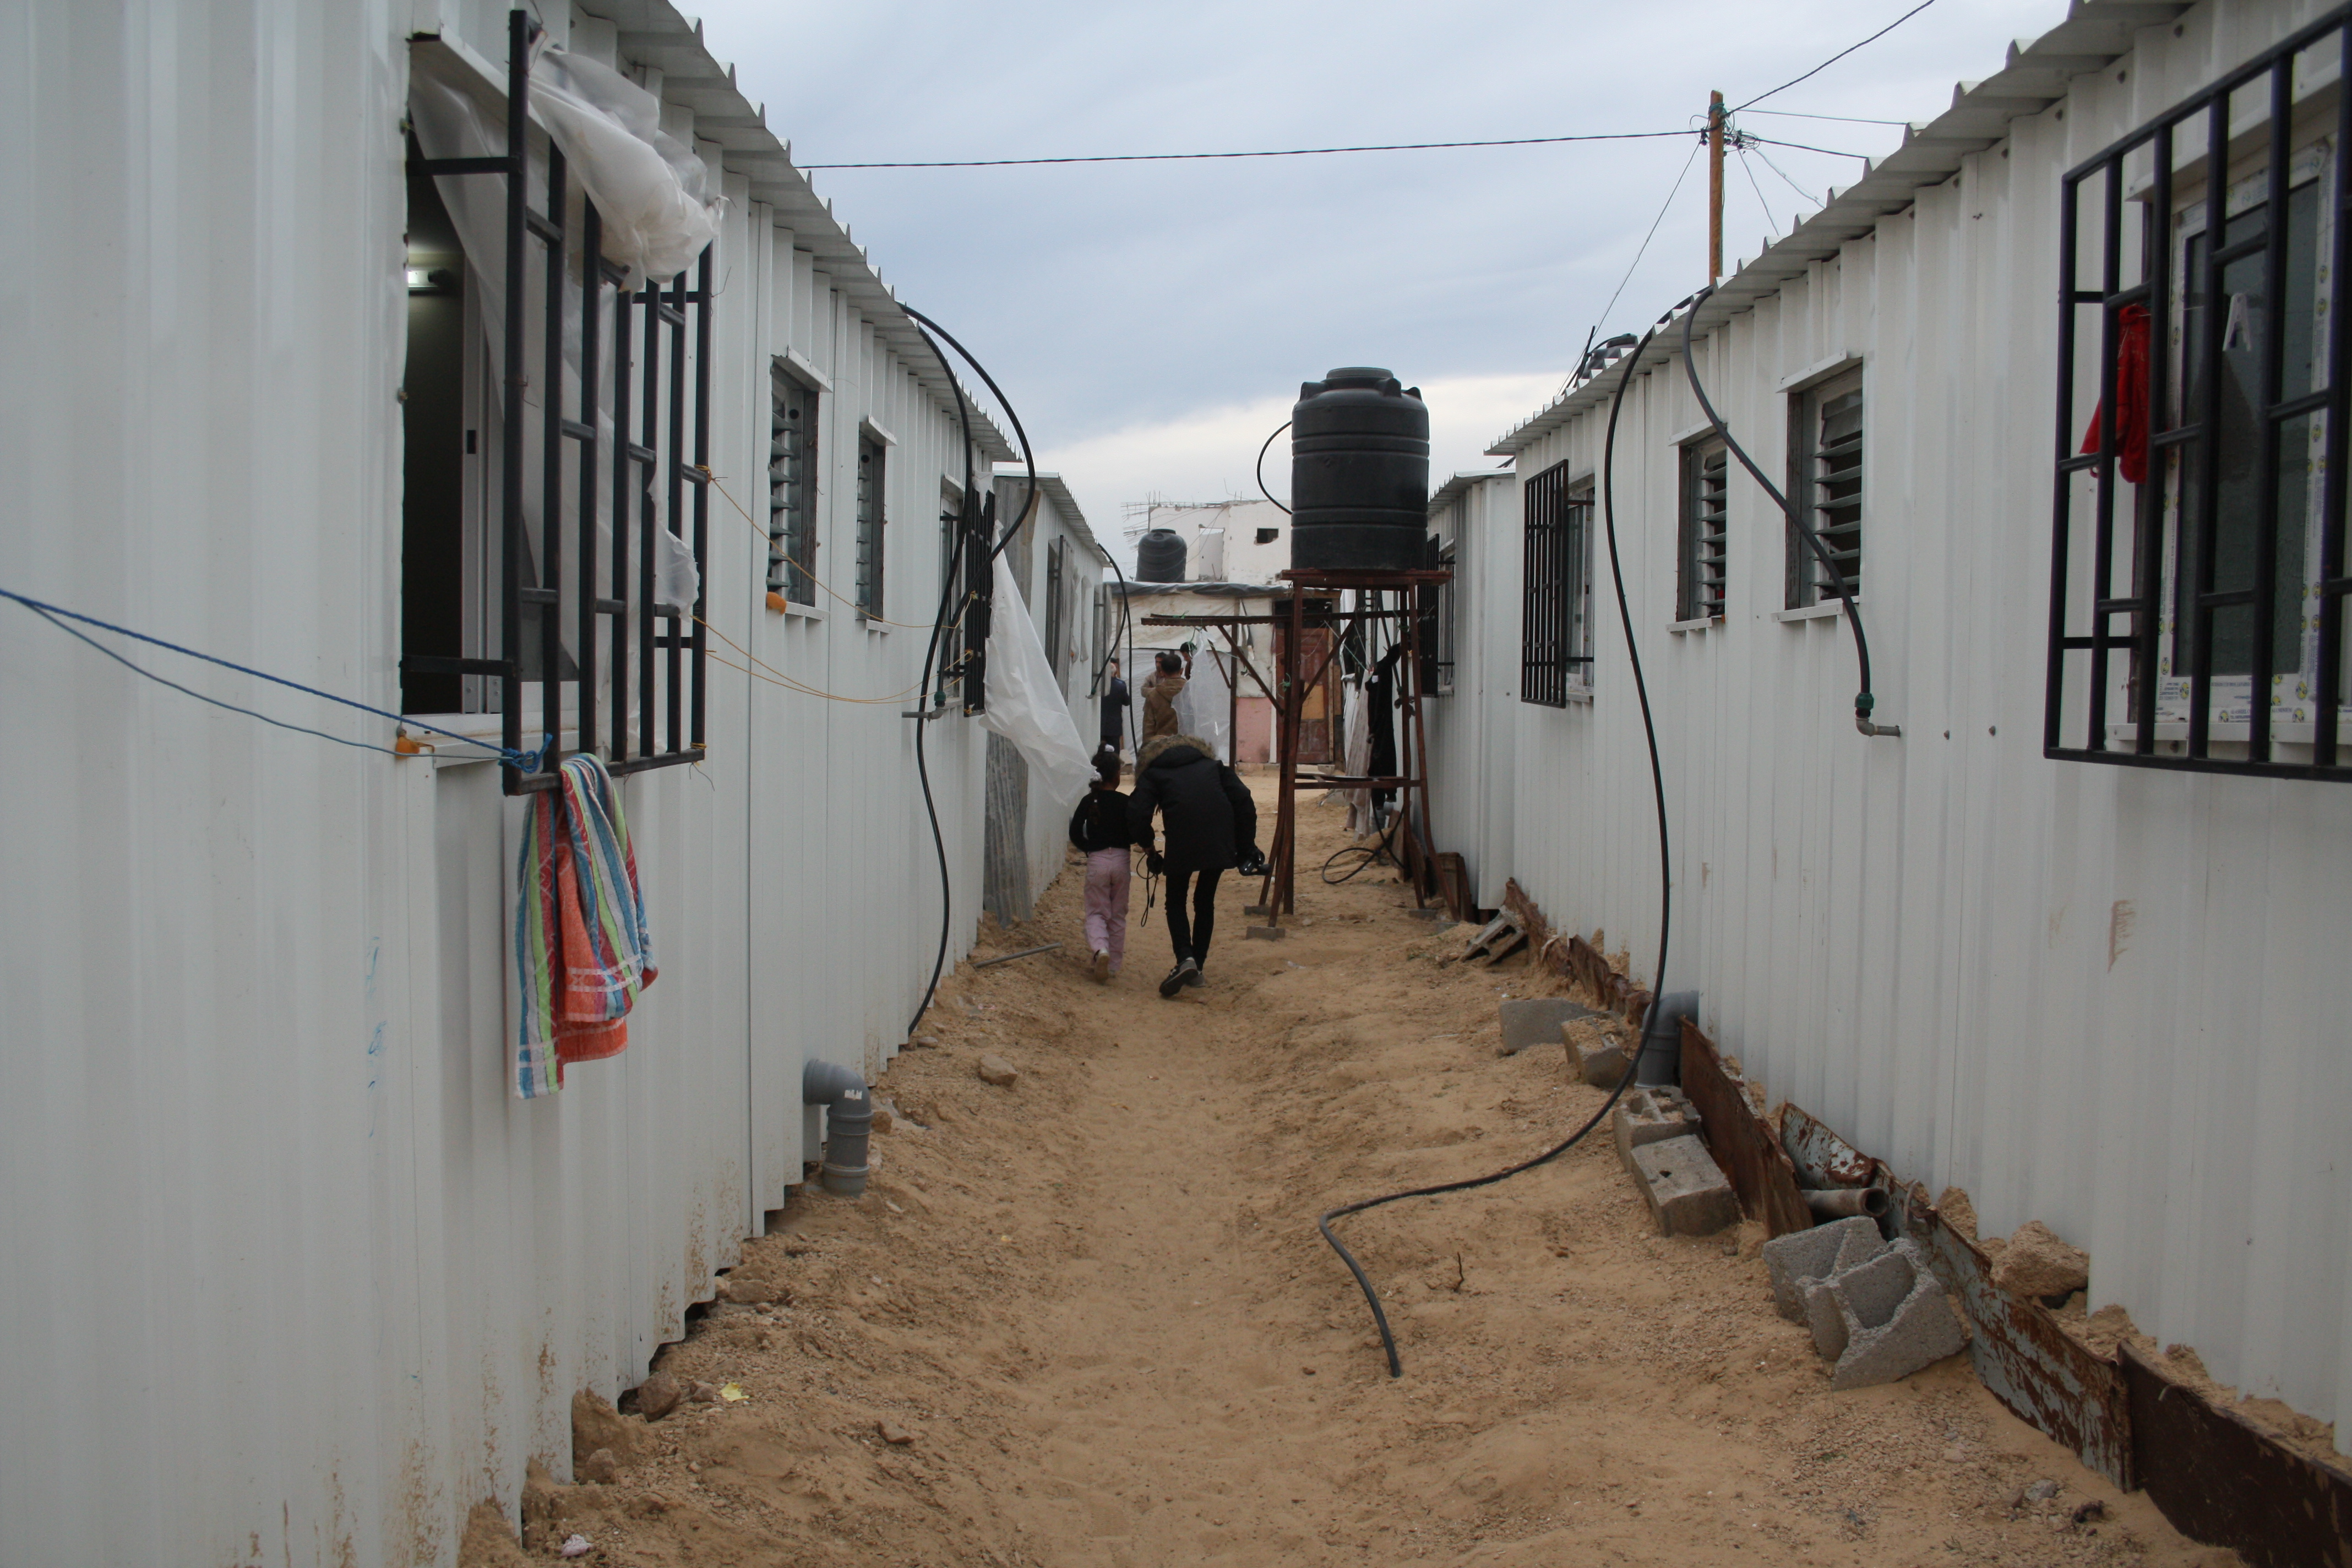 Mobile temporary shelters in Gaza (photo: Ylenia Gostoli)